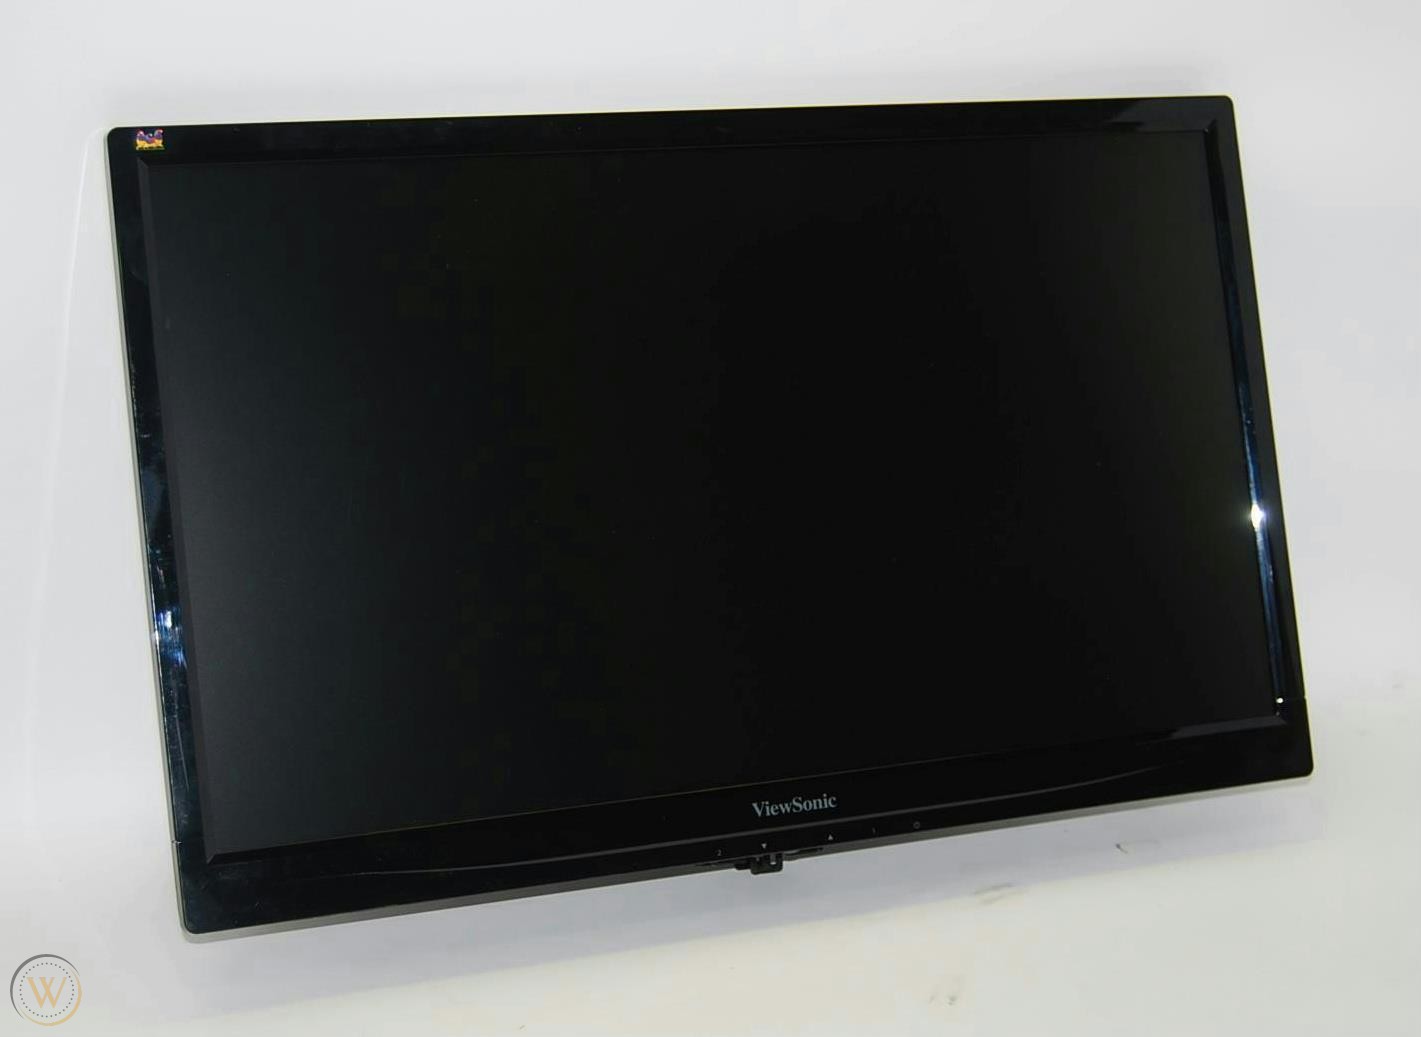   ViewSonic VA2246M-LED LCD FHD Display Monitor 22